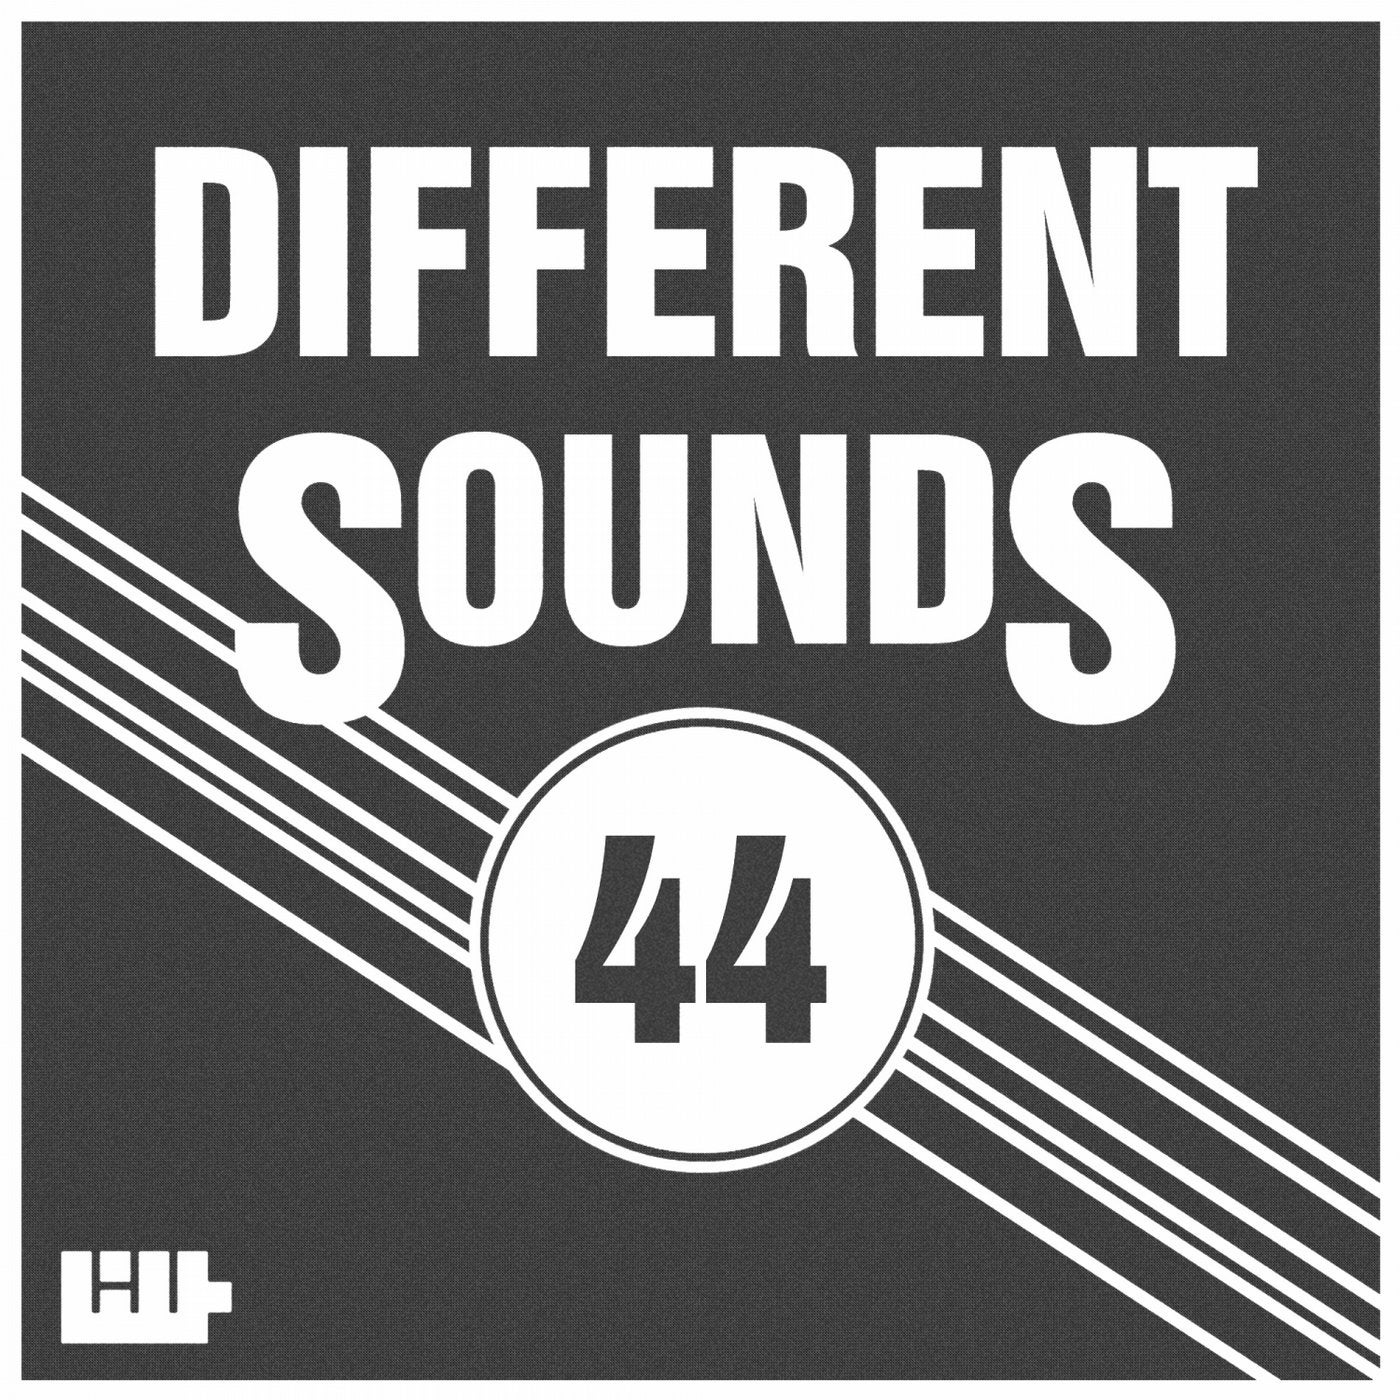 Different Sounds, Vol. 44